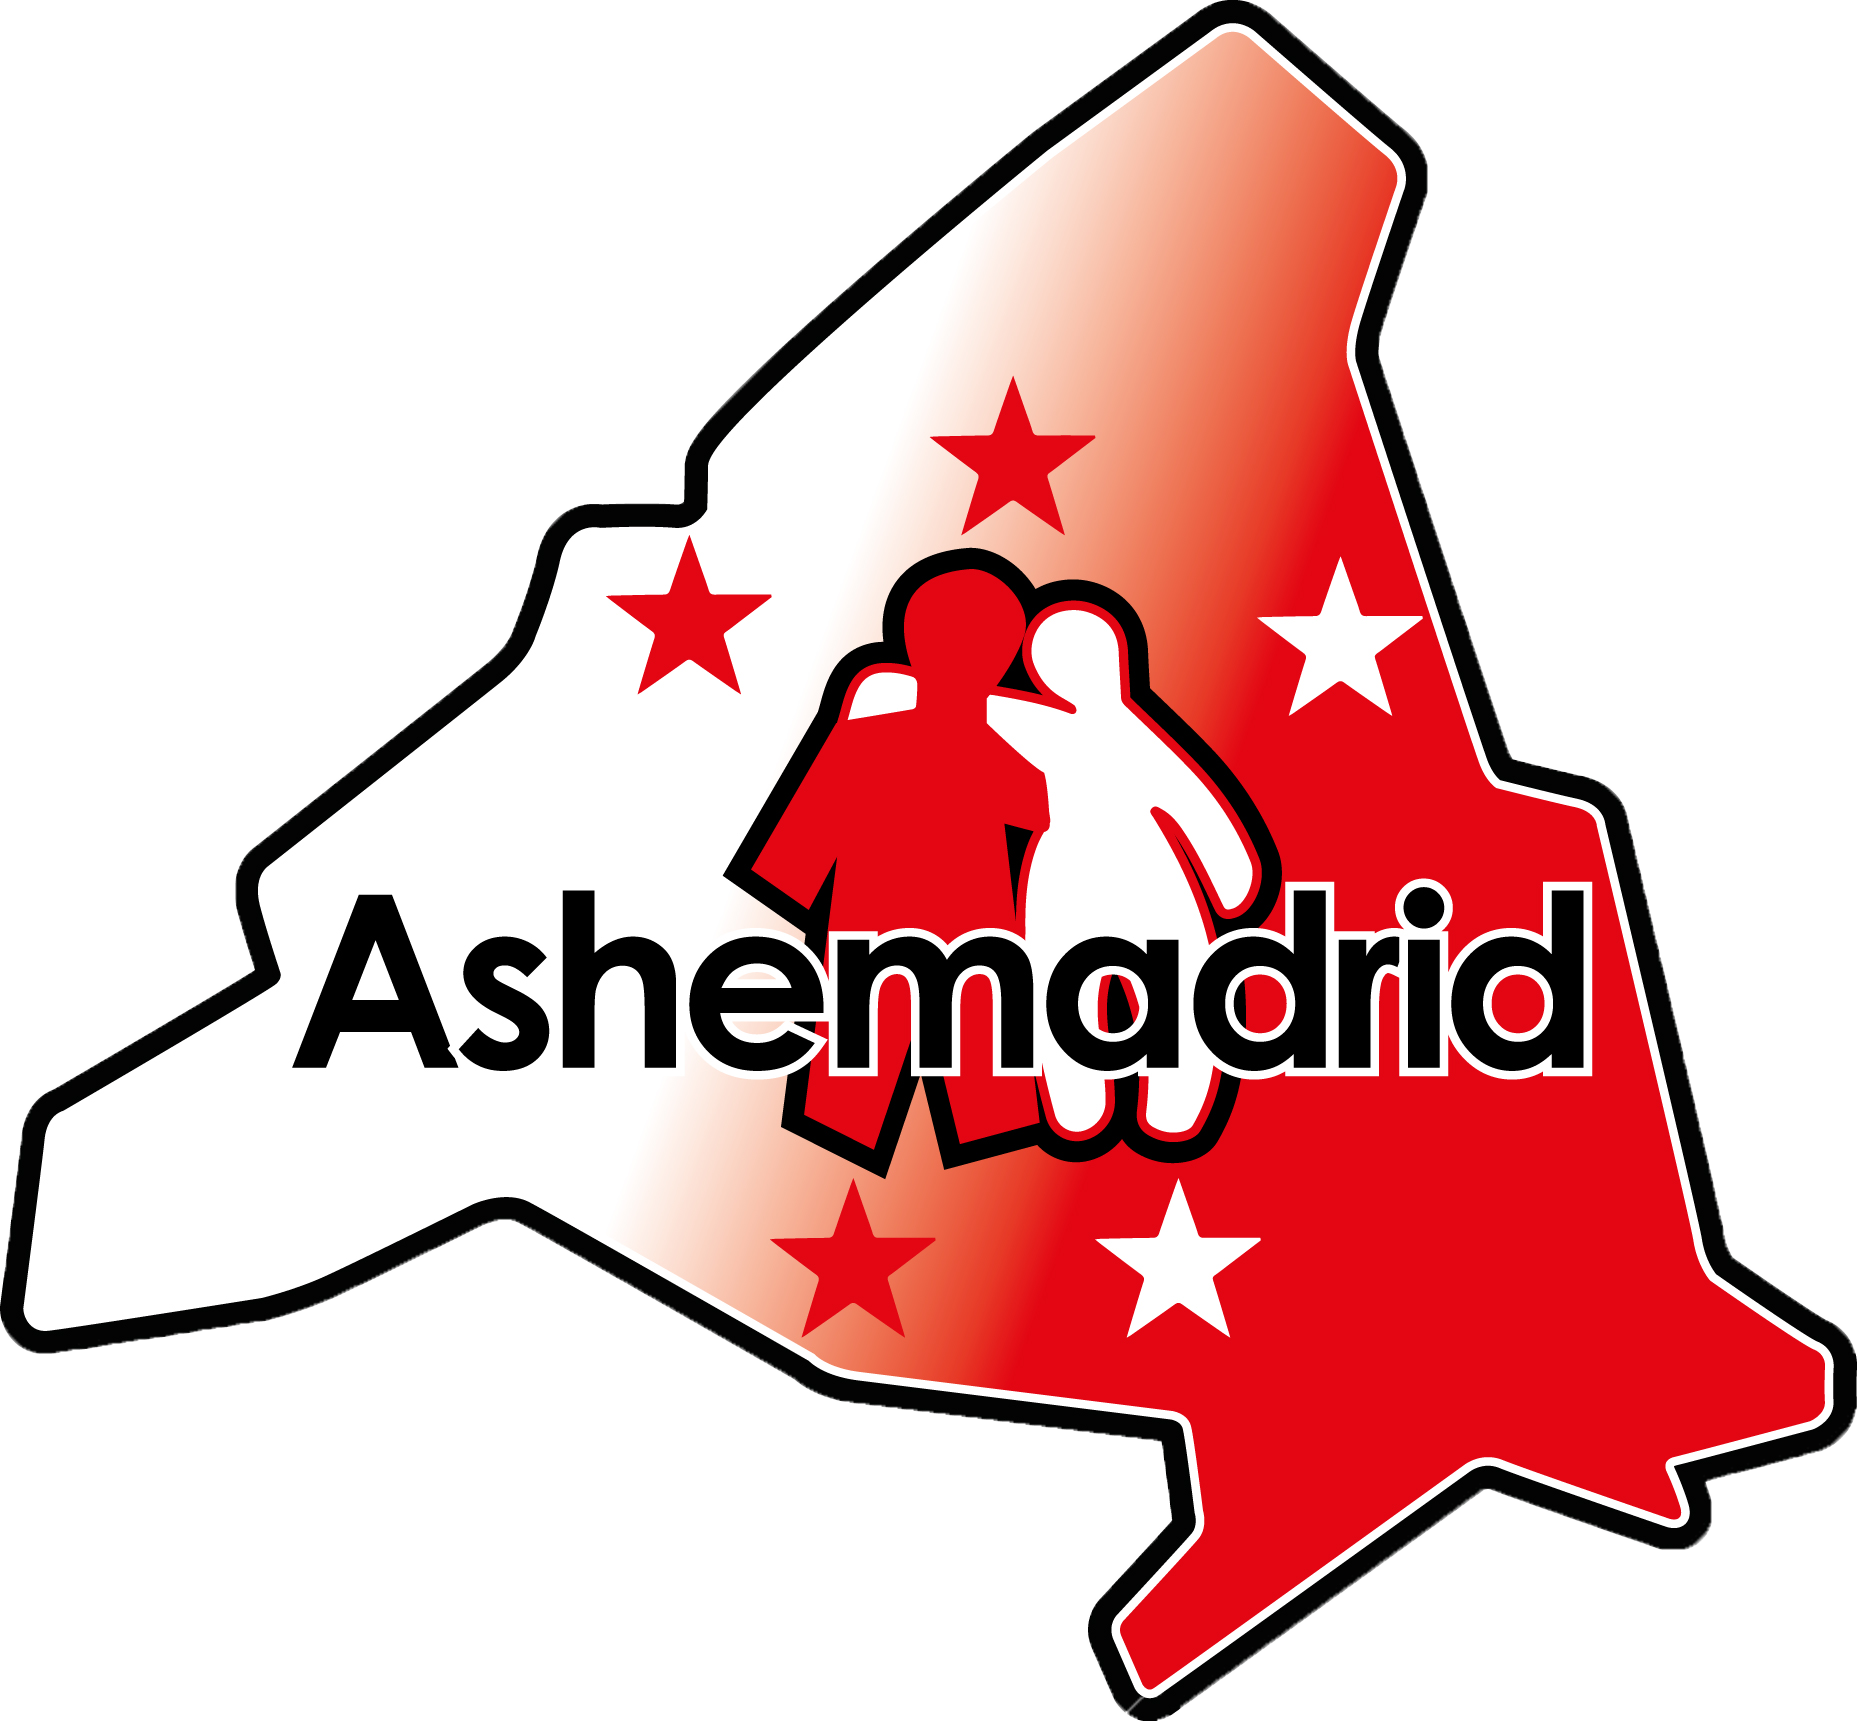 Logo de Ashemadrid